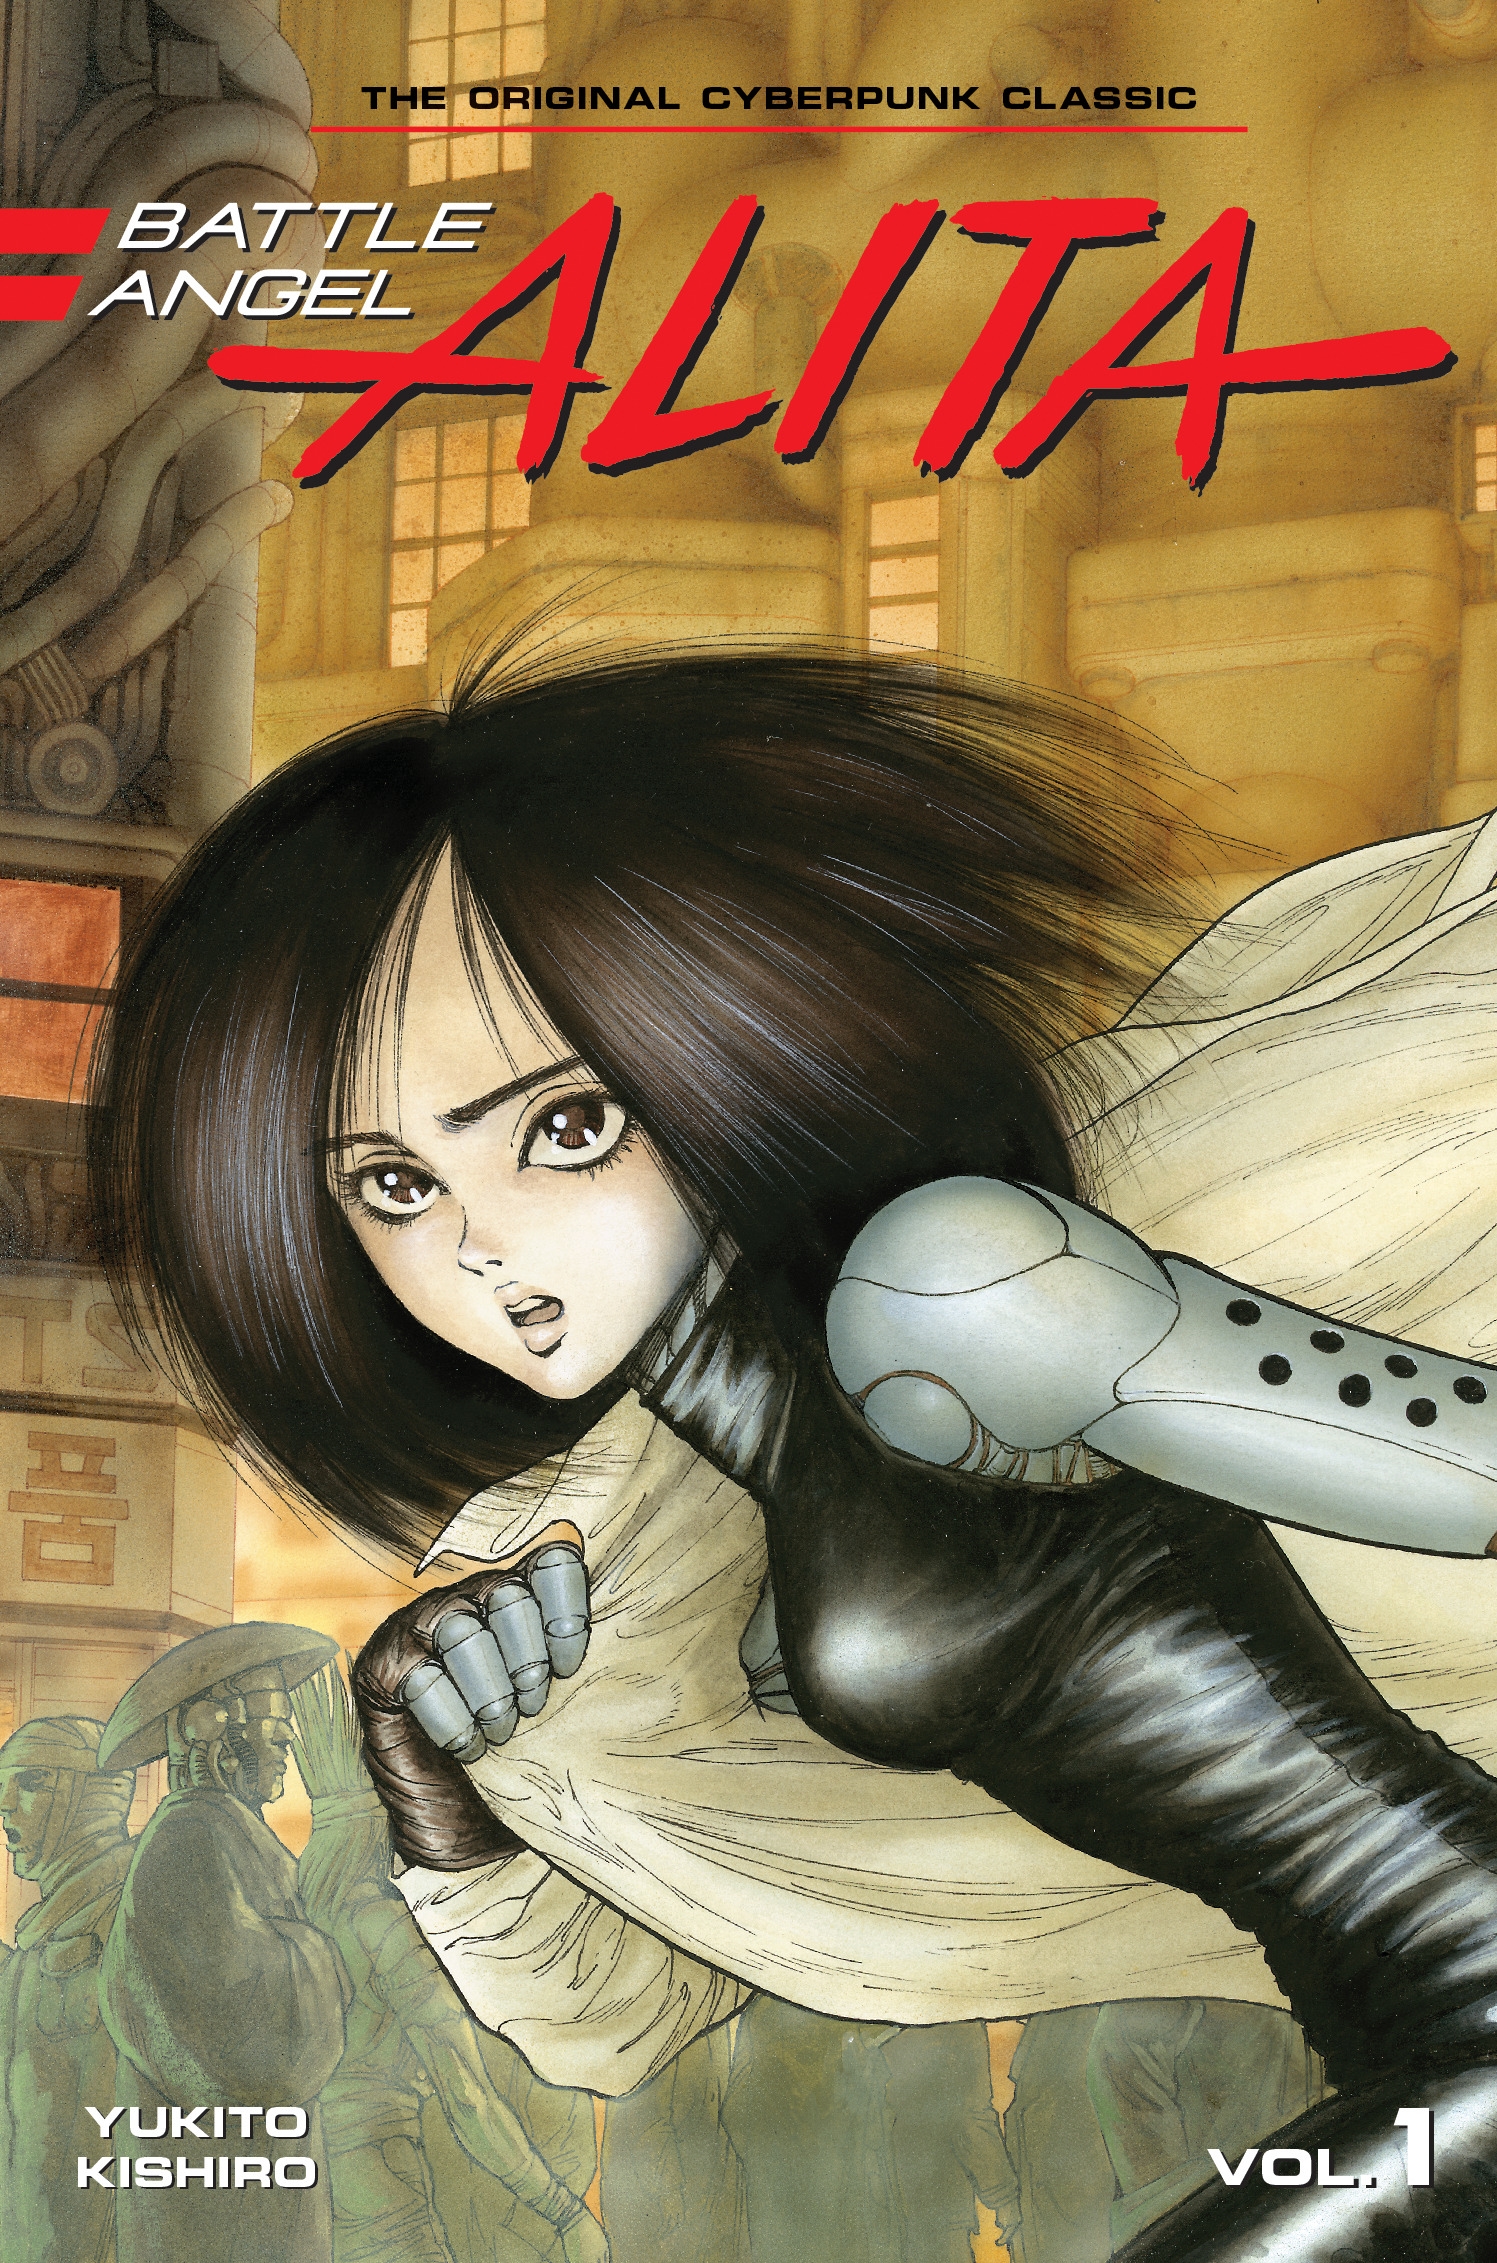 Battle Angel Alita 1 (Paperback) by Yukito Kishiro - Penguin Books New  Zealand